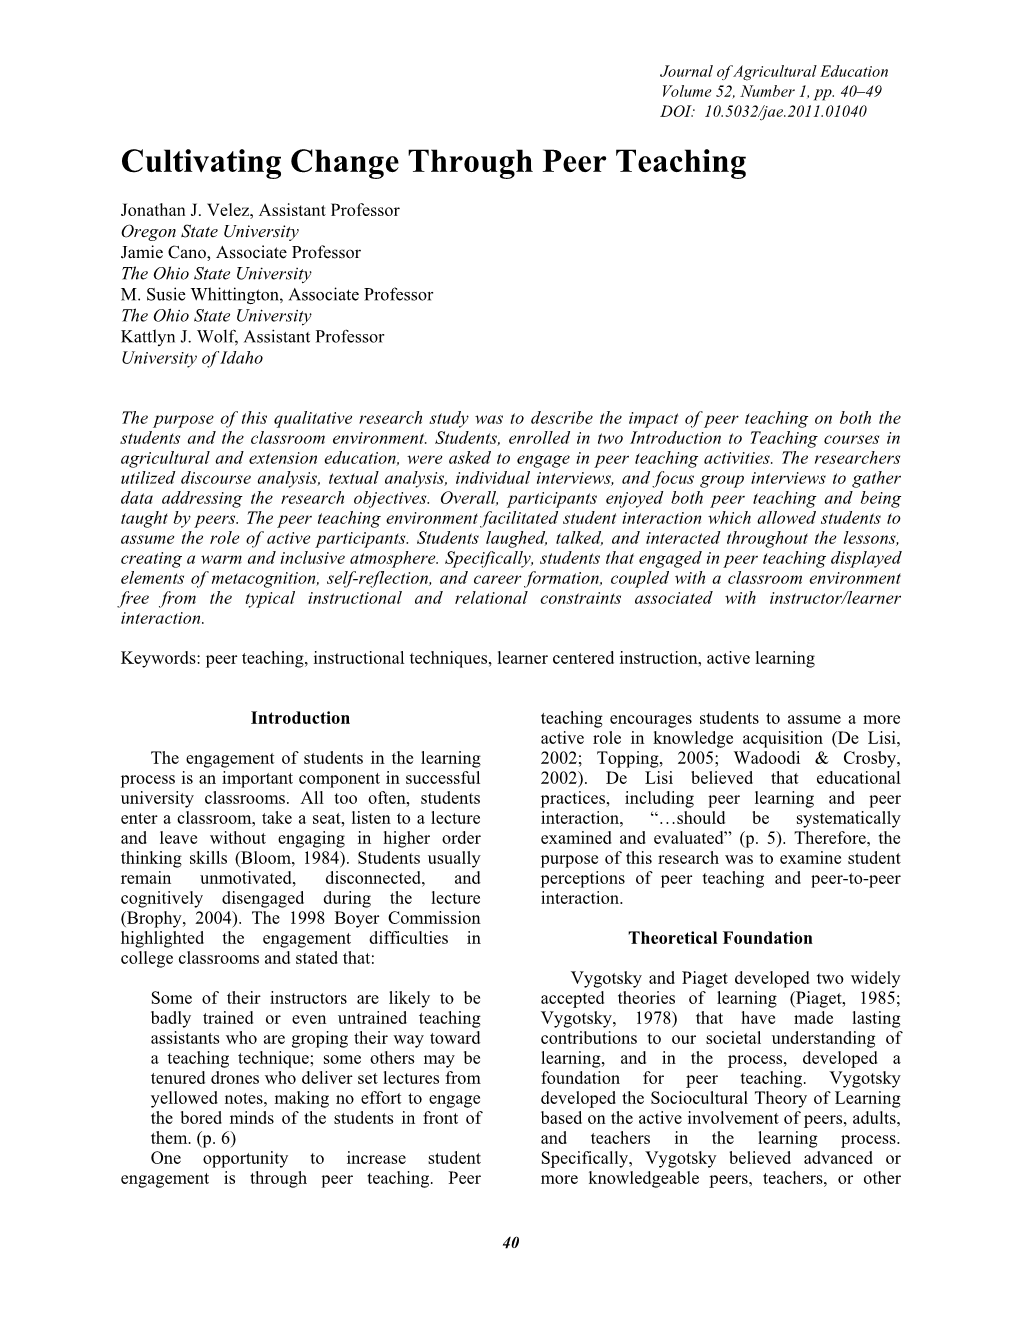 Cultivating Change Through Peer Teaching